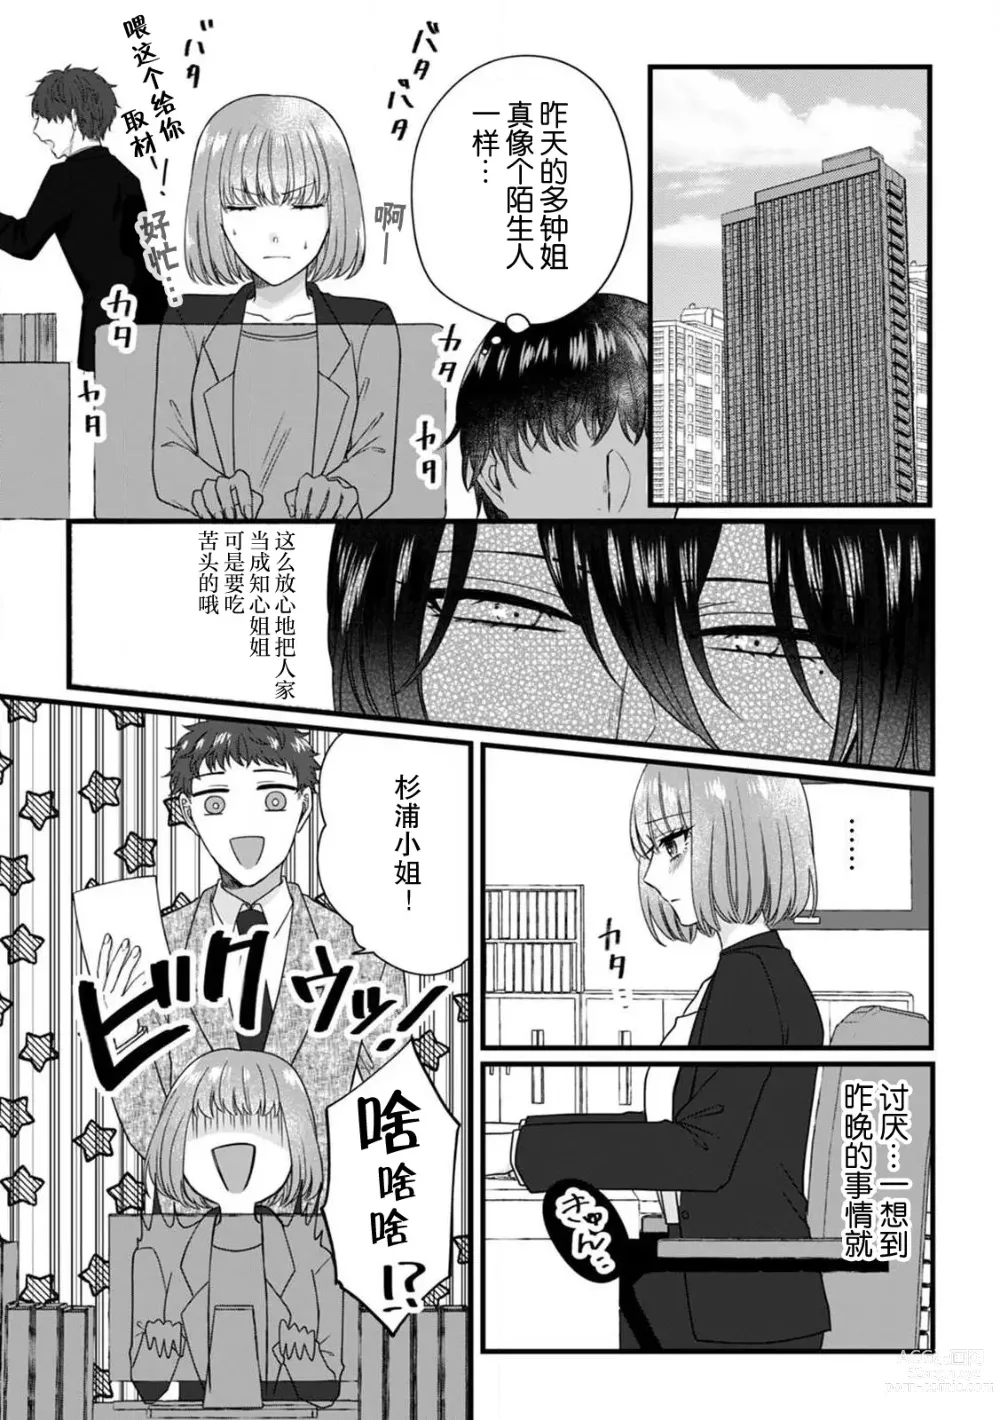 Page 20 of manga 弄湿我的是青梅竹马的男大姐 第一次见到……他认真的雄性一面。 1-5 end